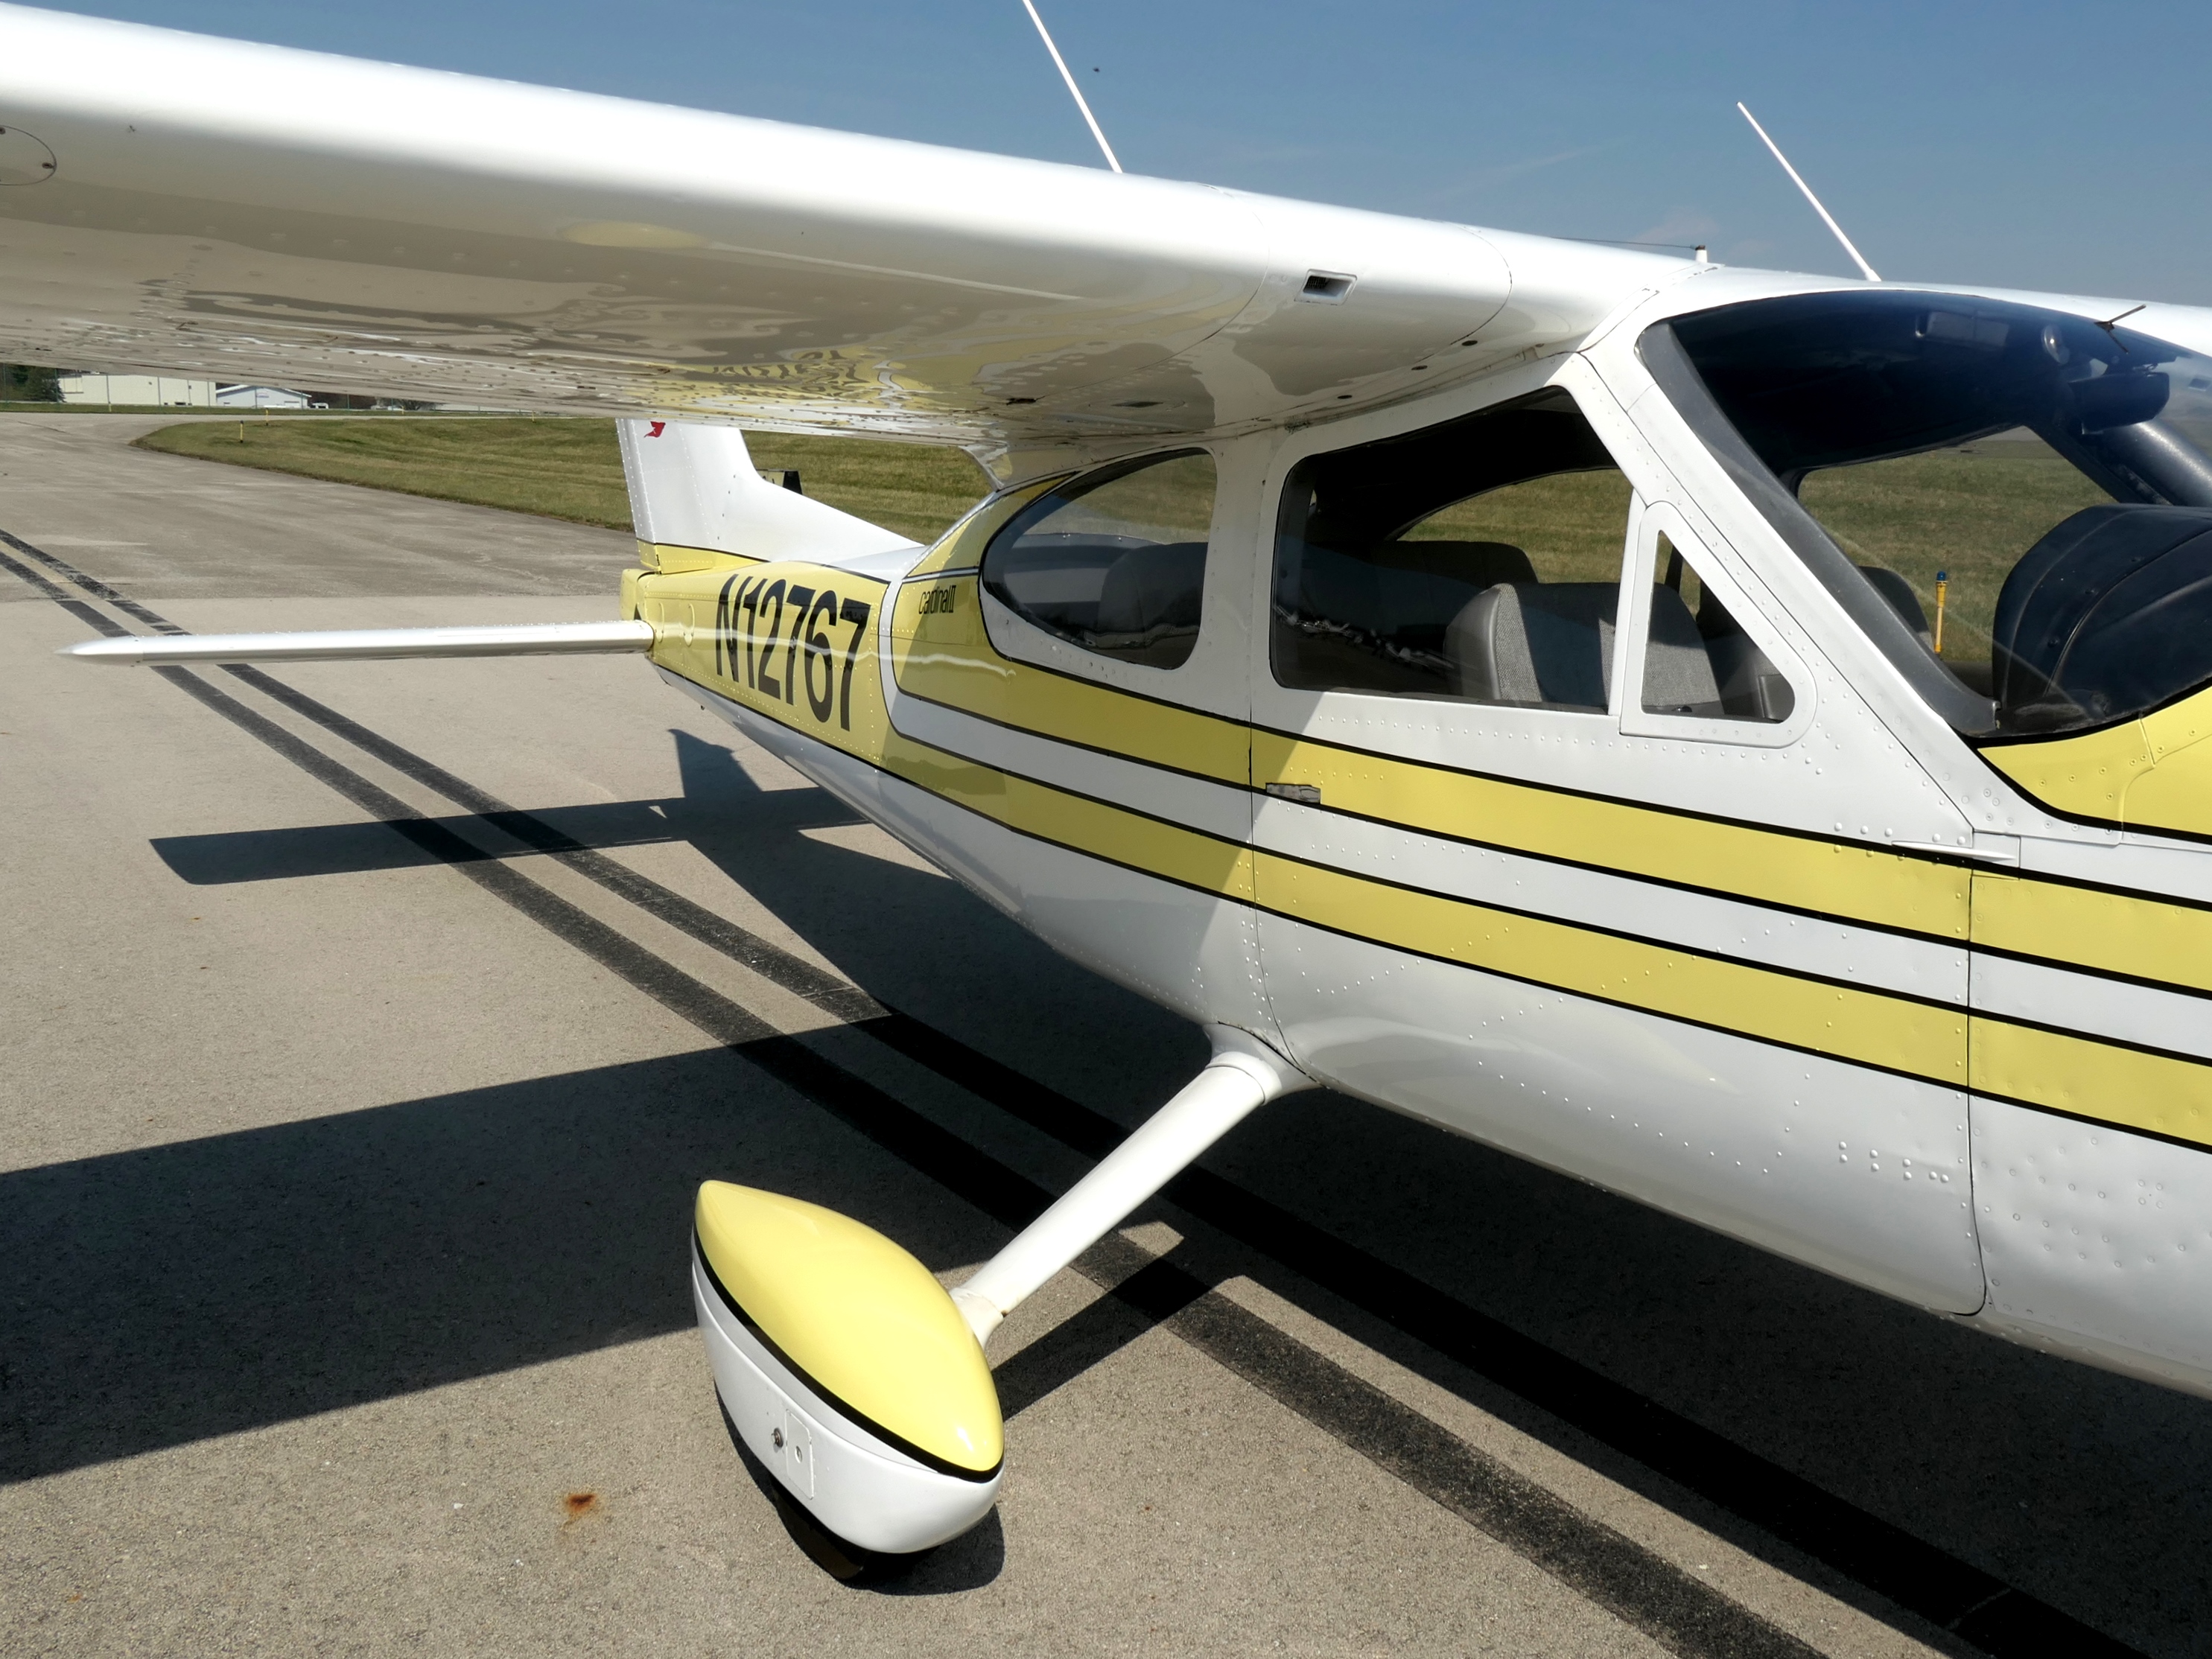 Cessna Cardinal 177B - N12767